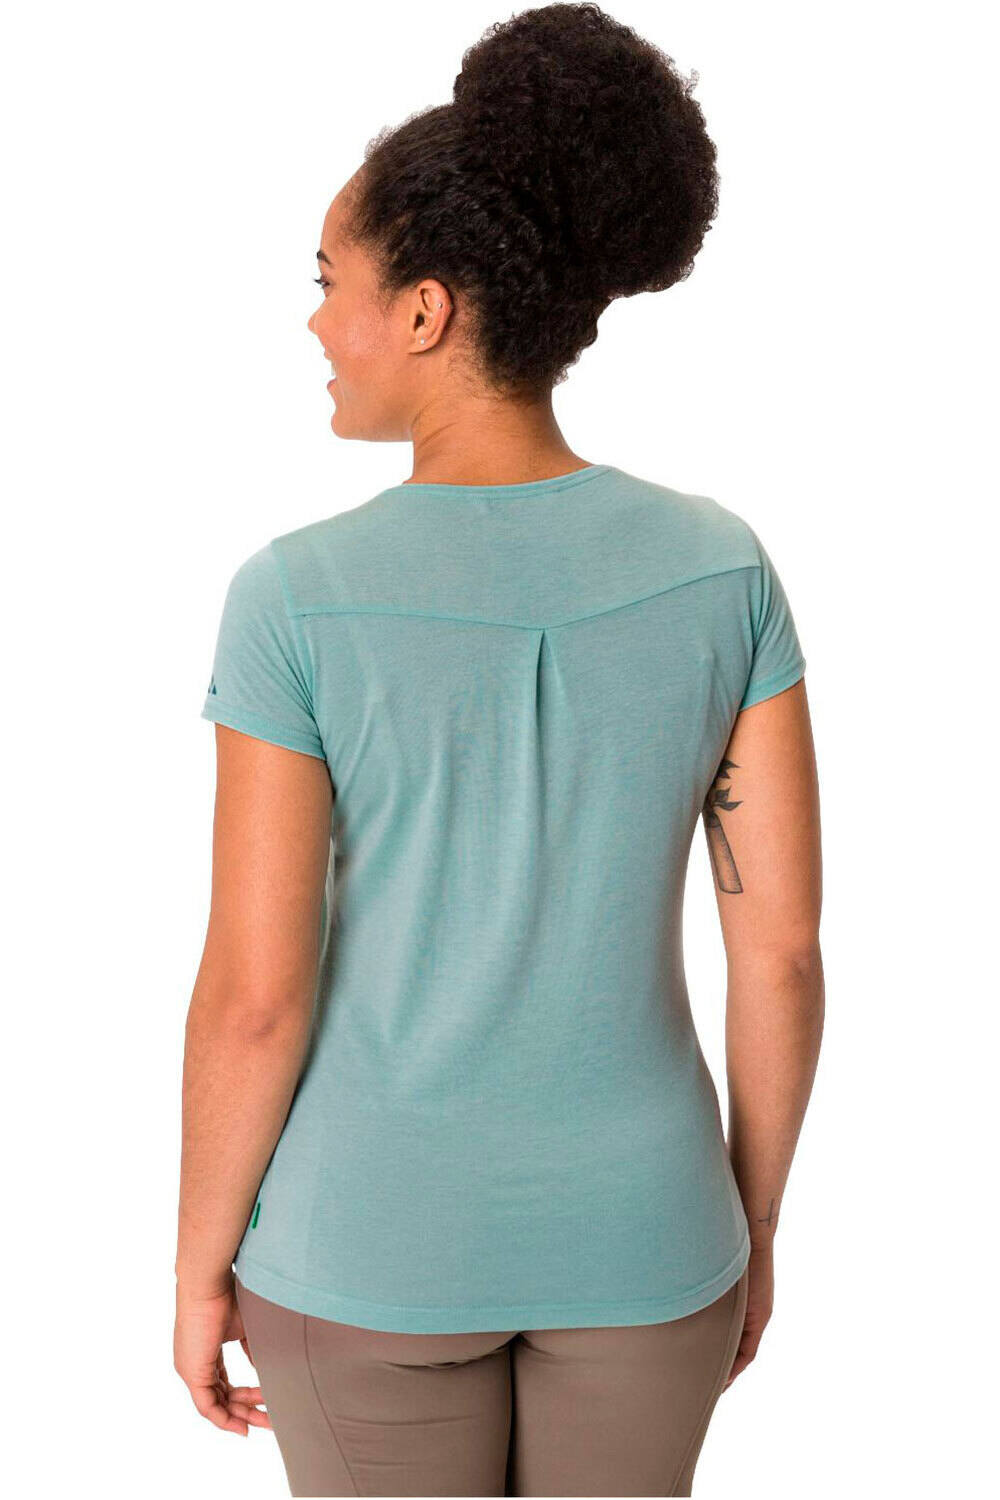 Vaude camiseta montaña manga corta mujer Women  s Skomer Print T-Shirt II vista trasera